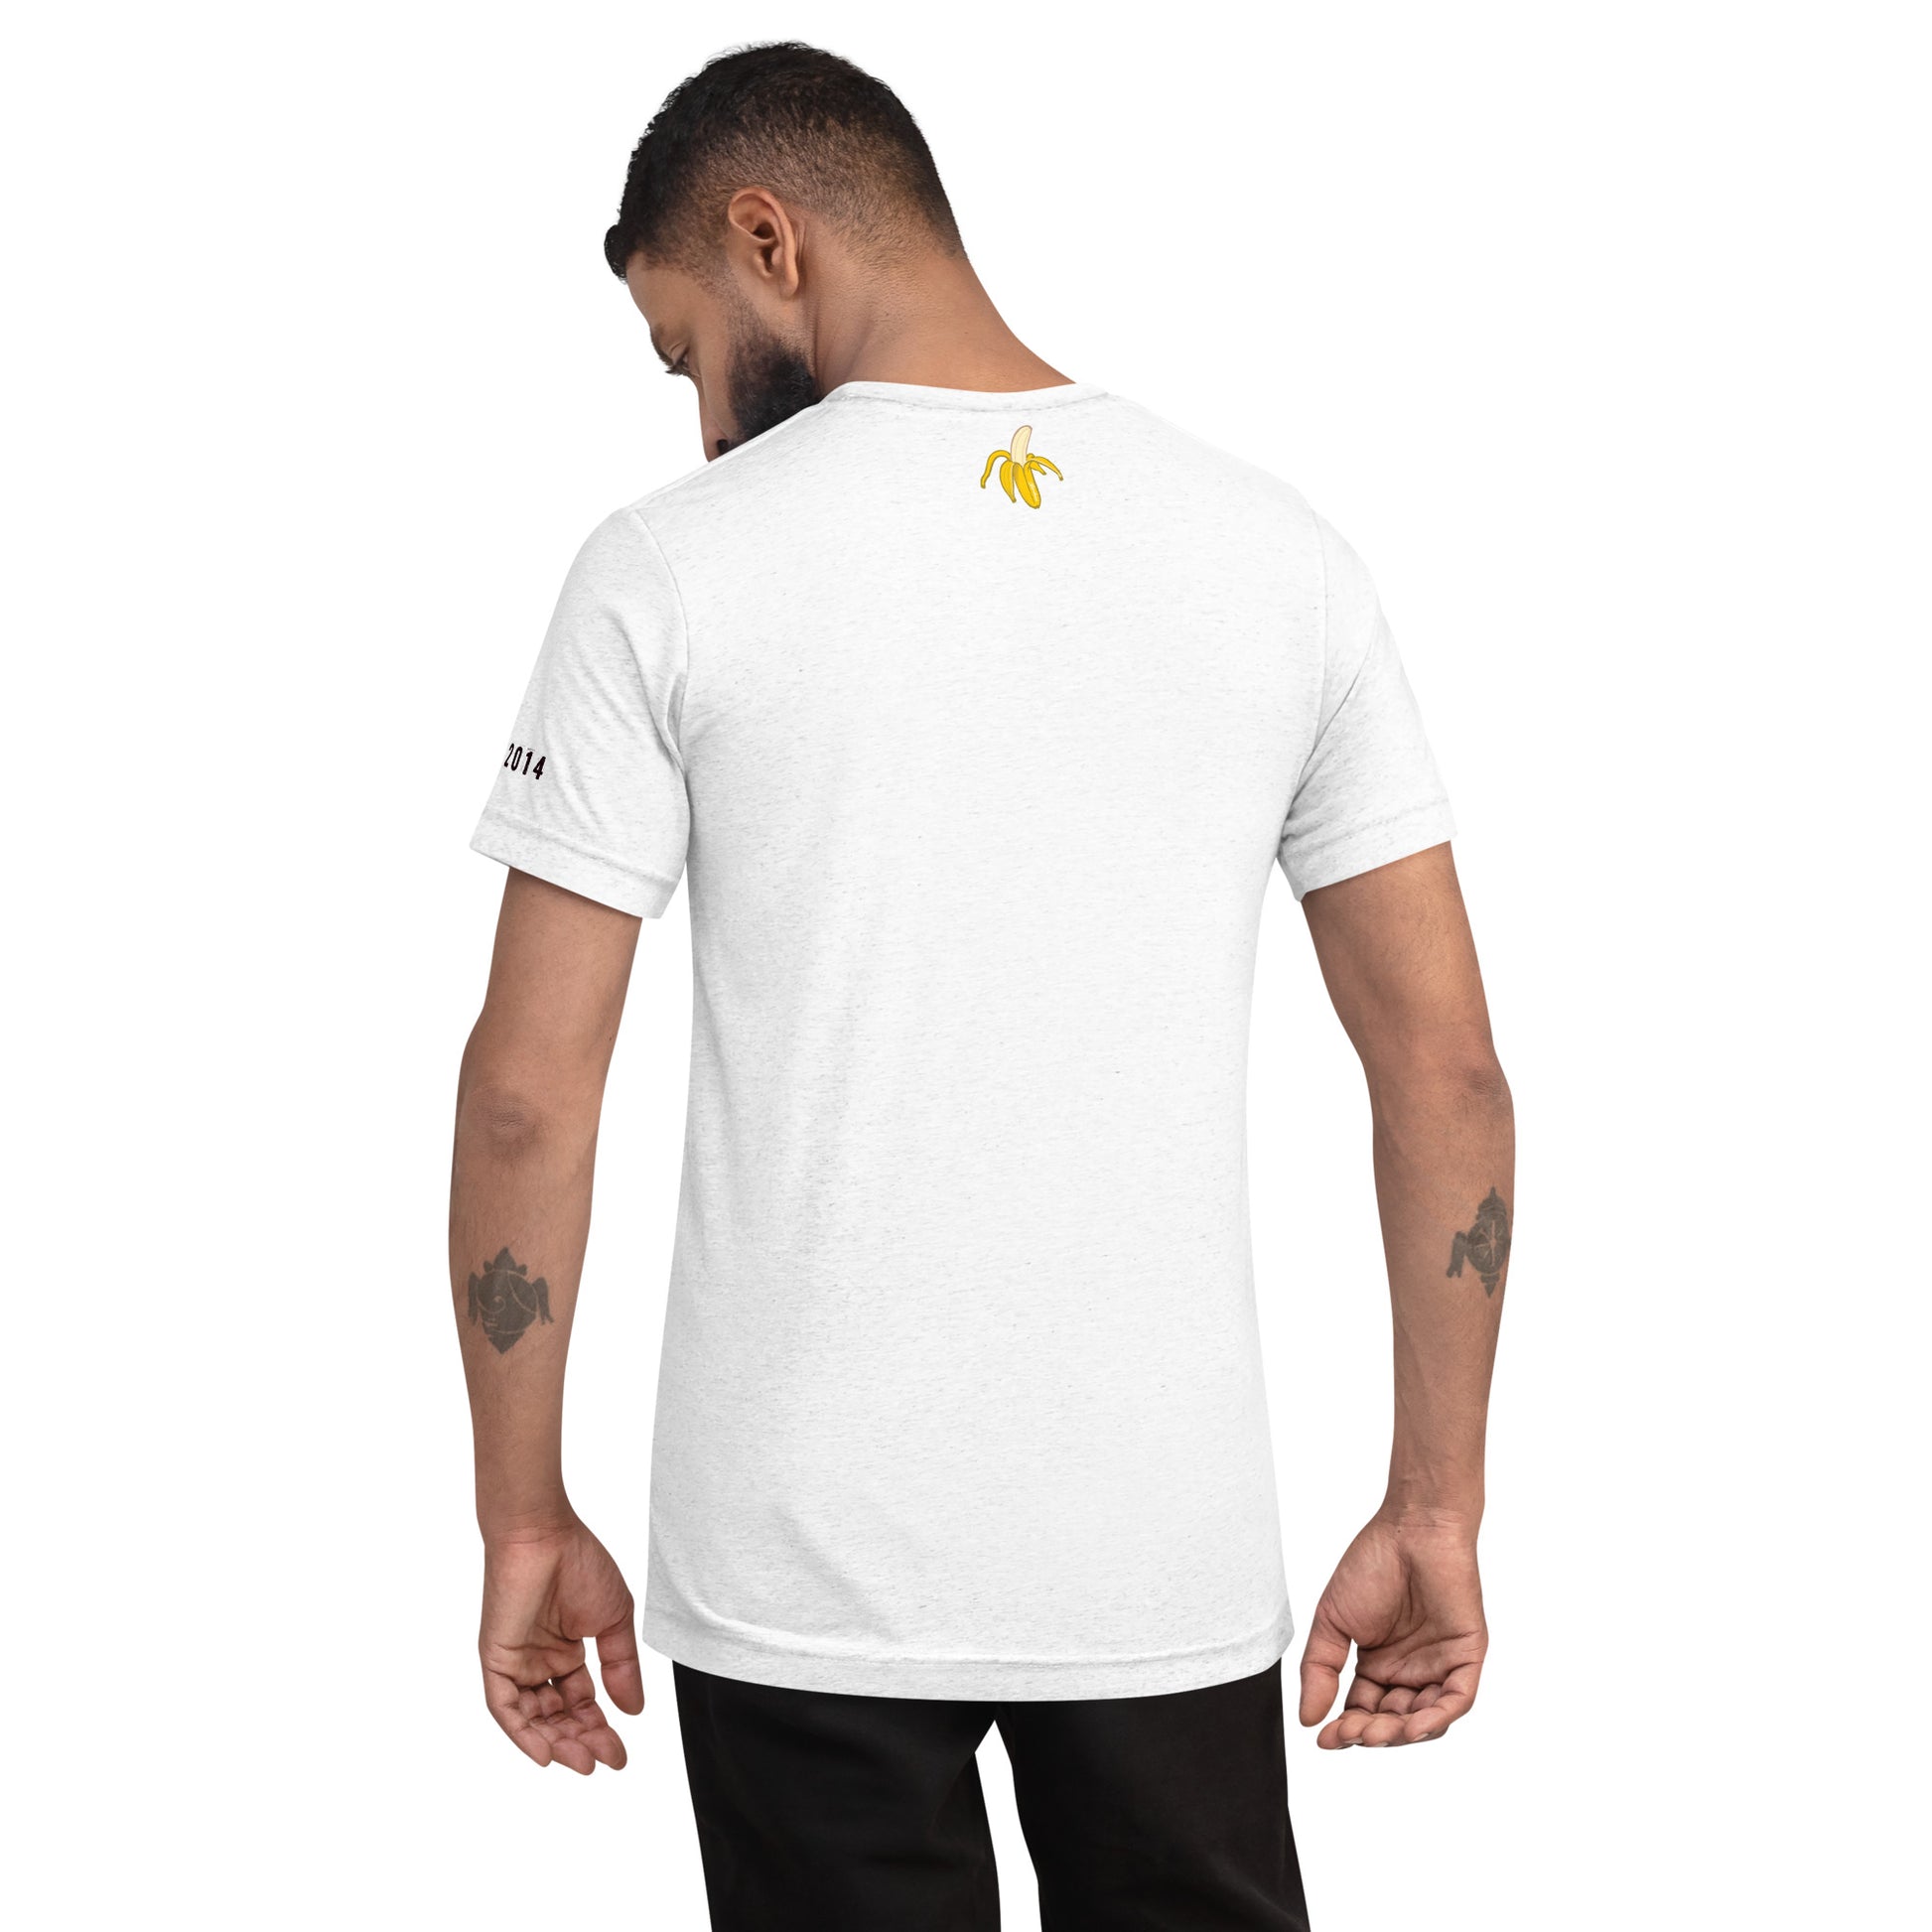 Easy Tiger white t-shirt.